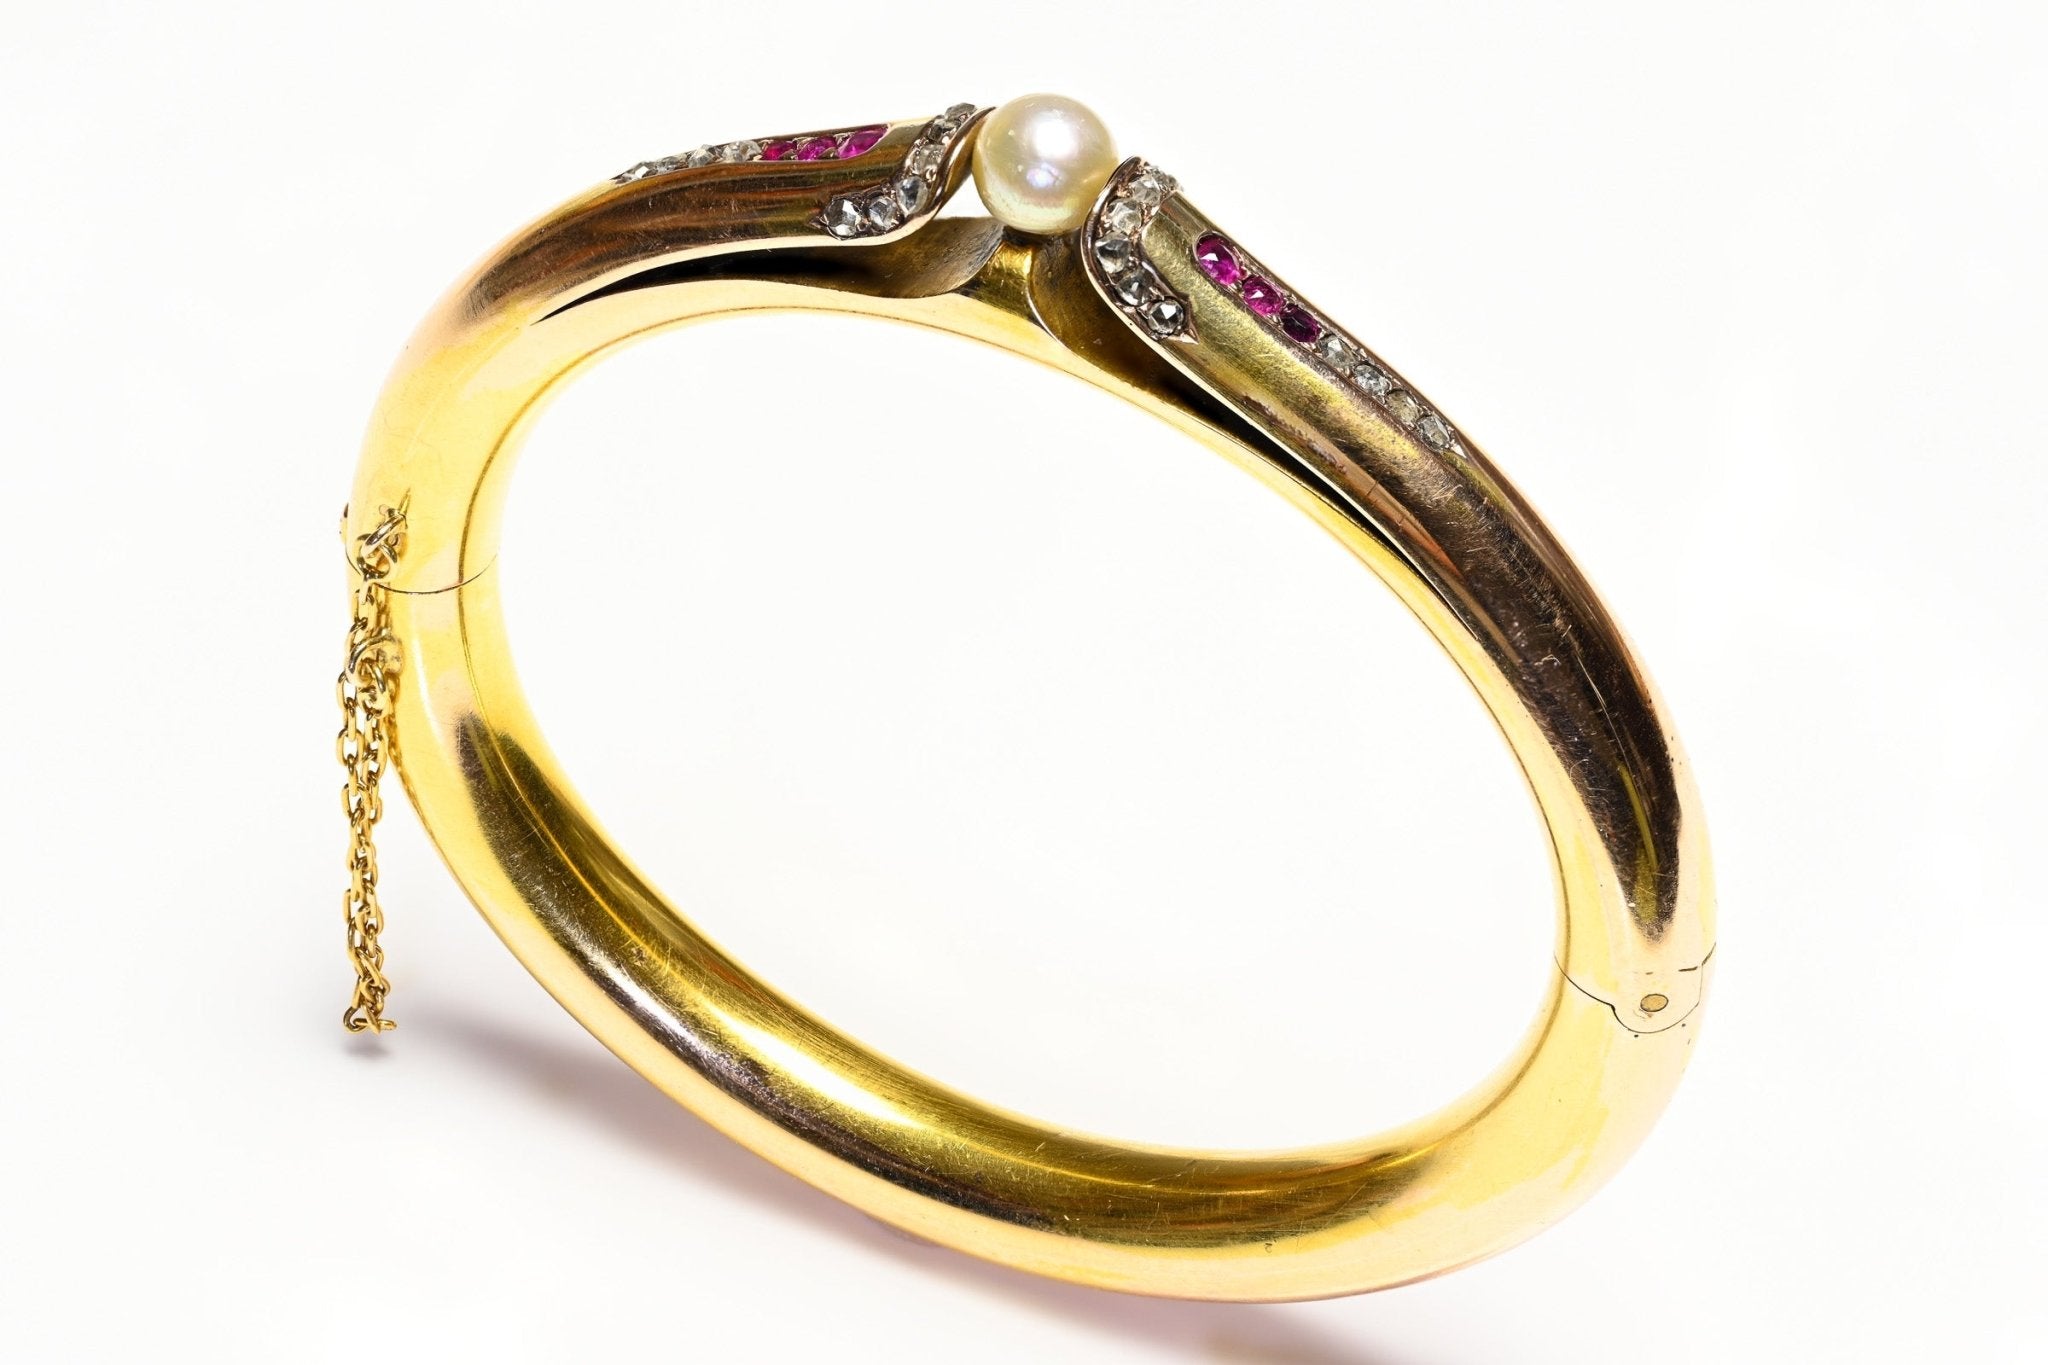 Antique 18K Gold Ruby Diamond Natural Pearl Bangle Bracelet